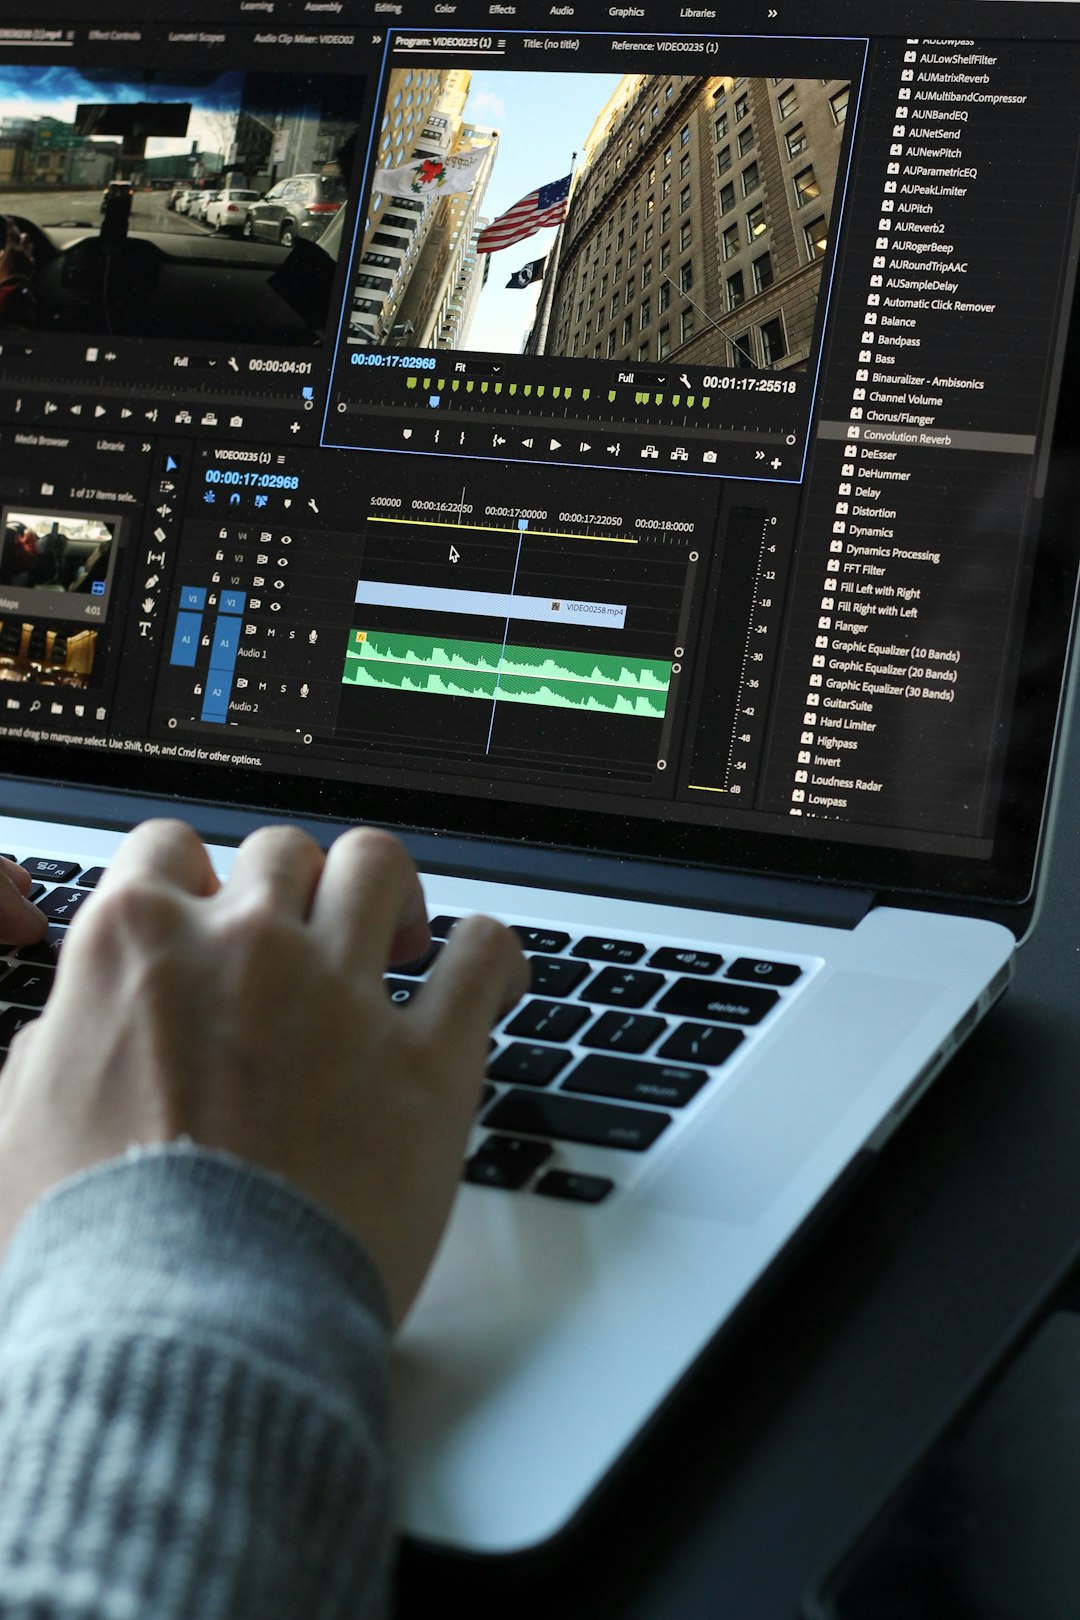 Free Video Editing Software Like Imovie For Mac